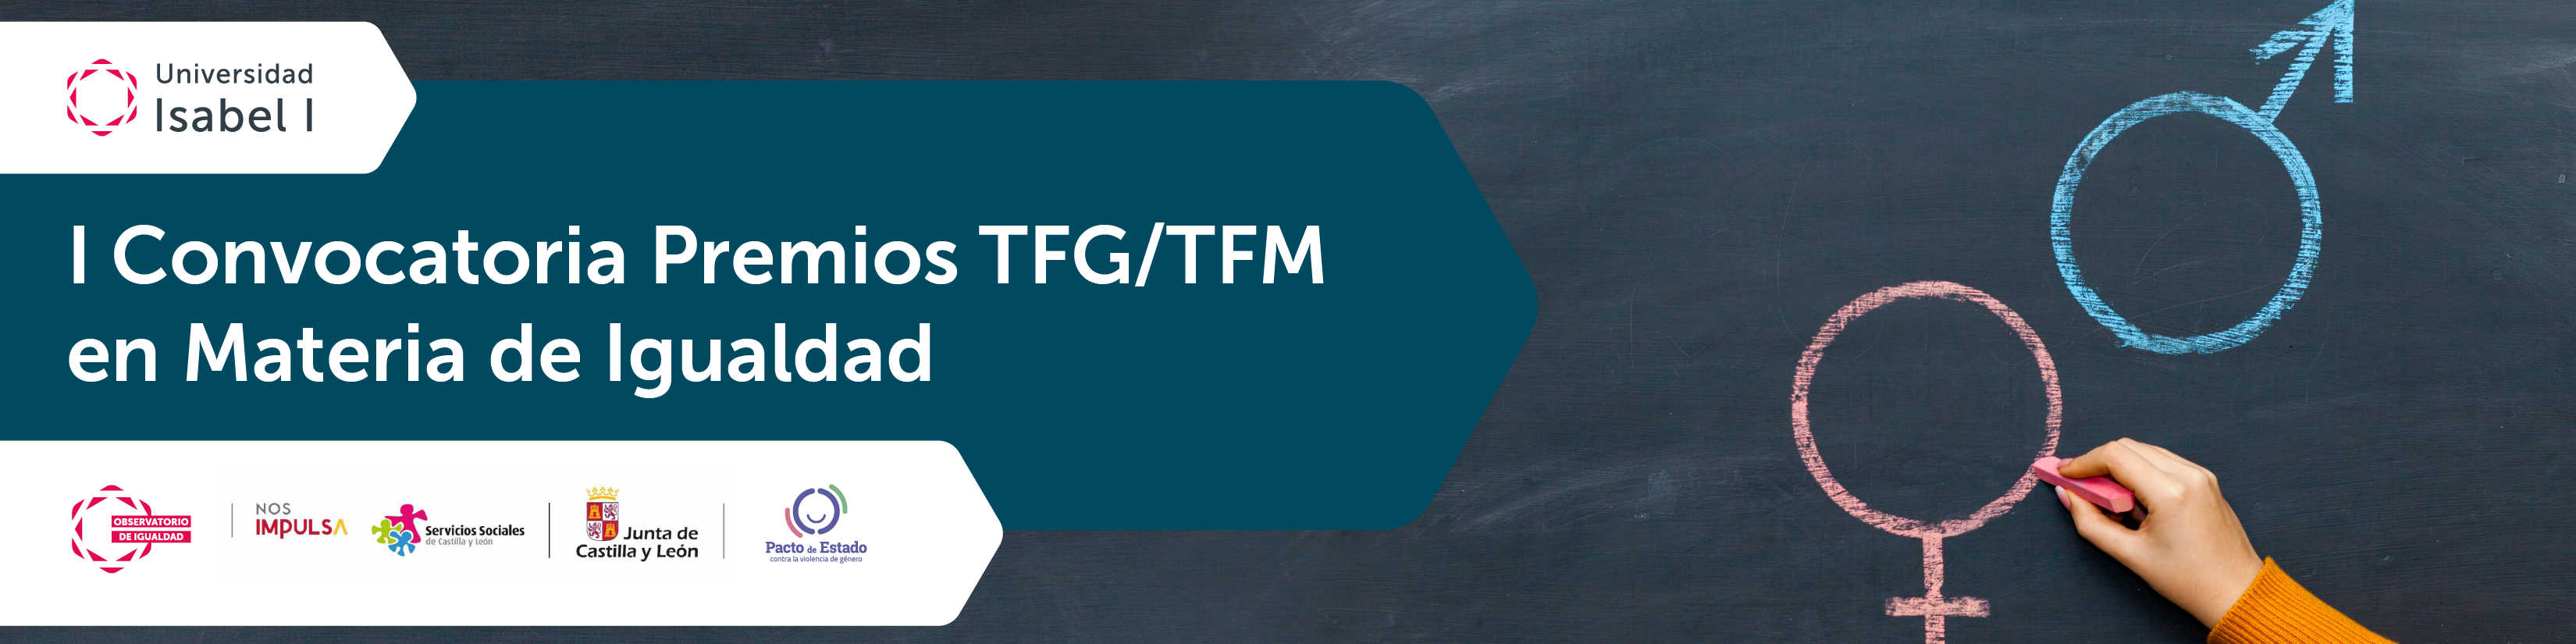 Premios TFG/TFM